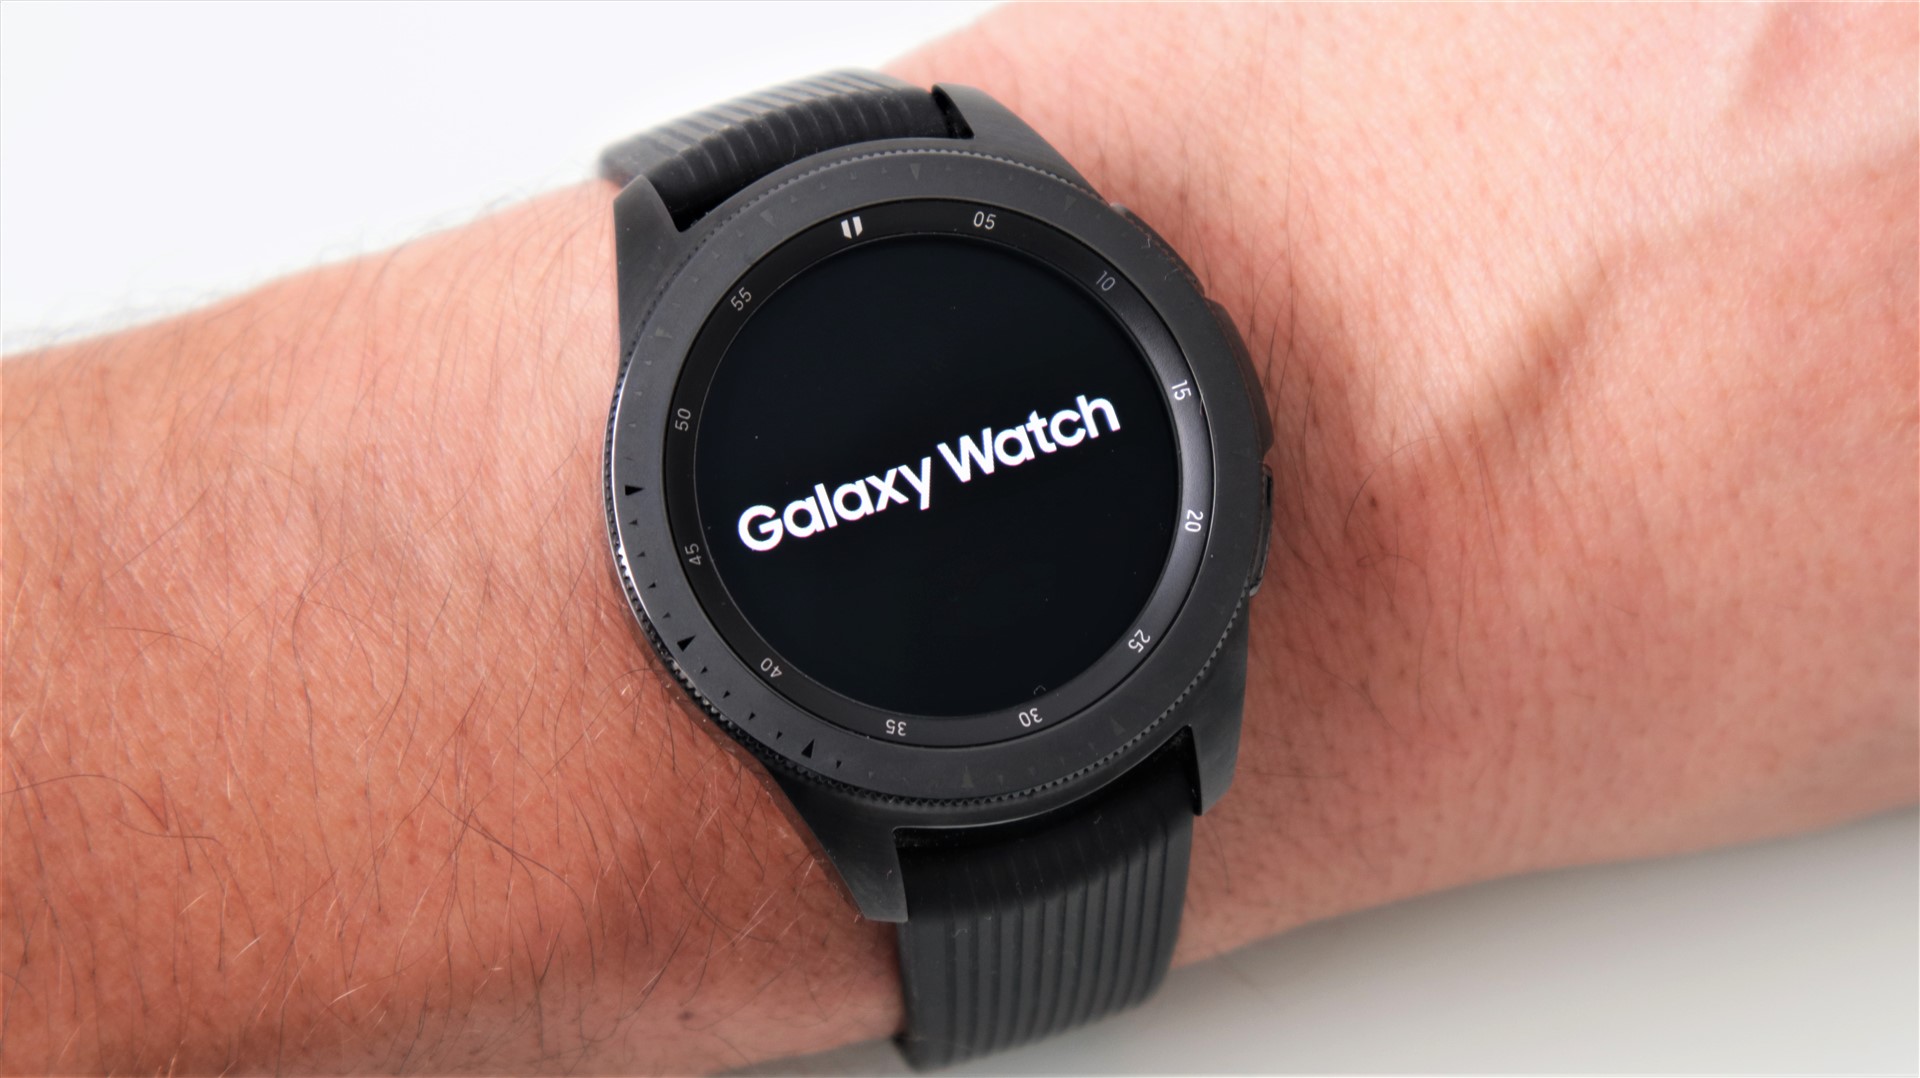 Samsung Galaxy Watch 42 Черный